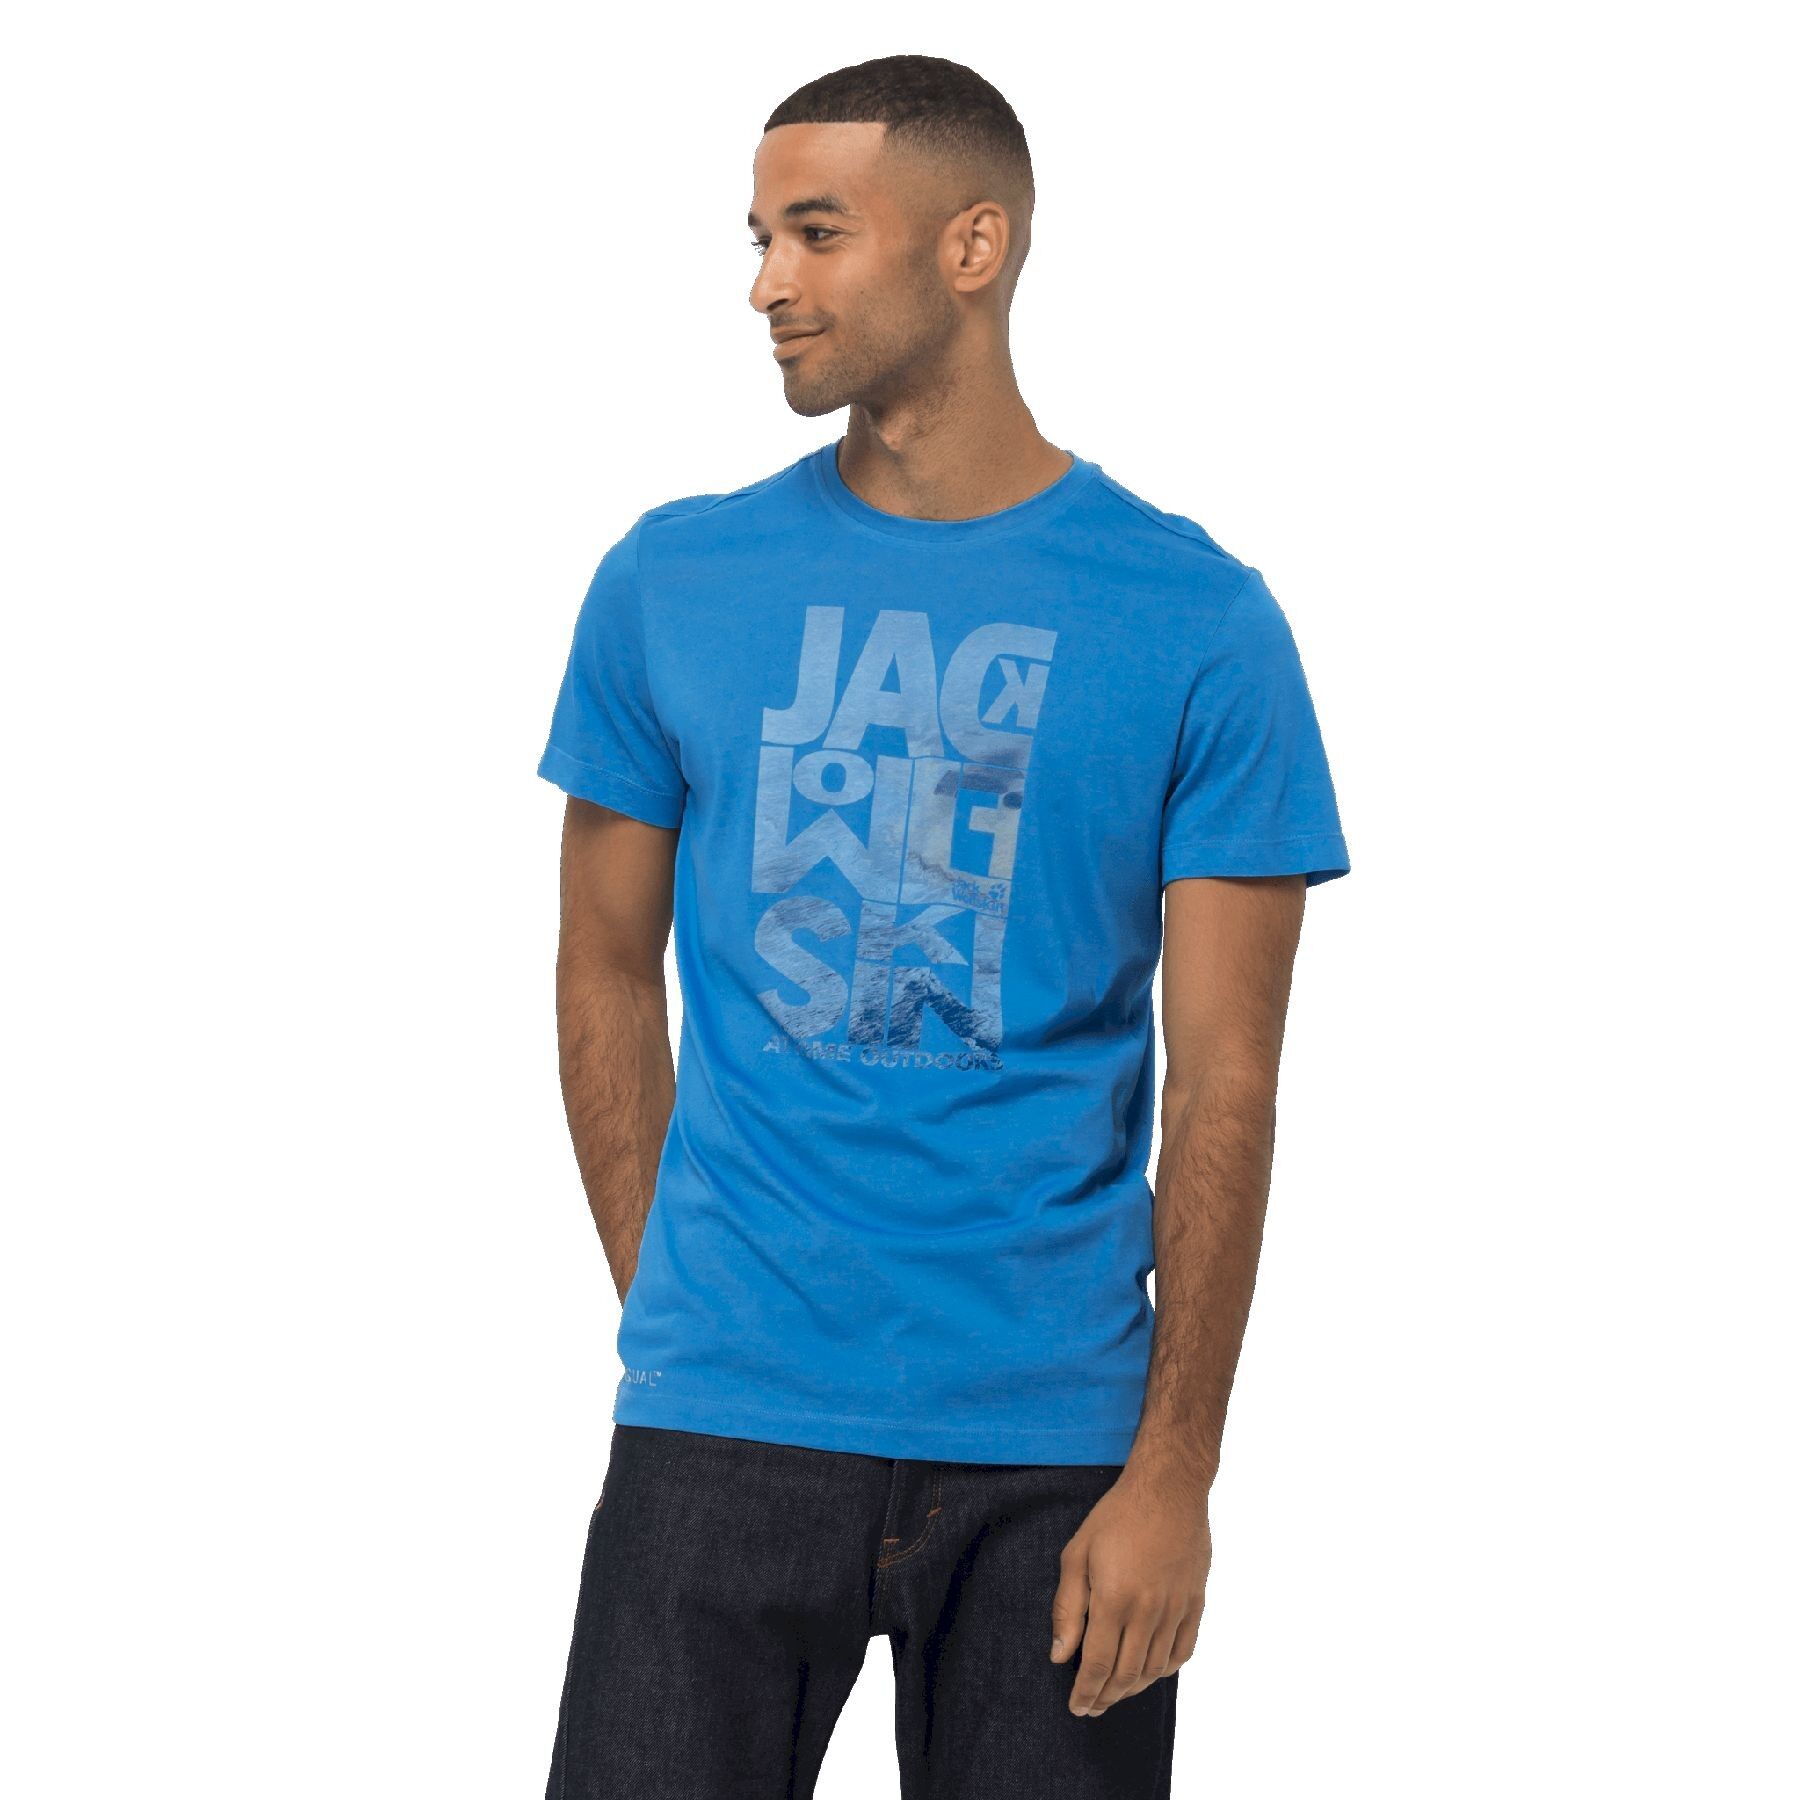 Jack Wolfskin Atlantic Ocean T - Camiseta - Hombre